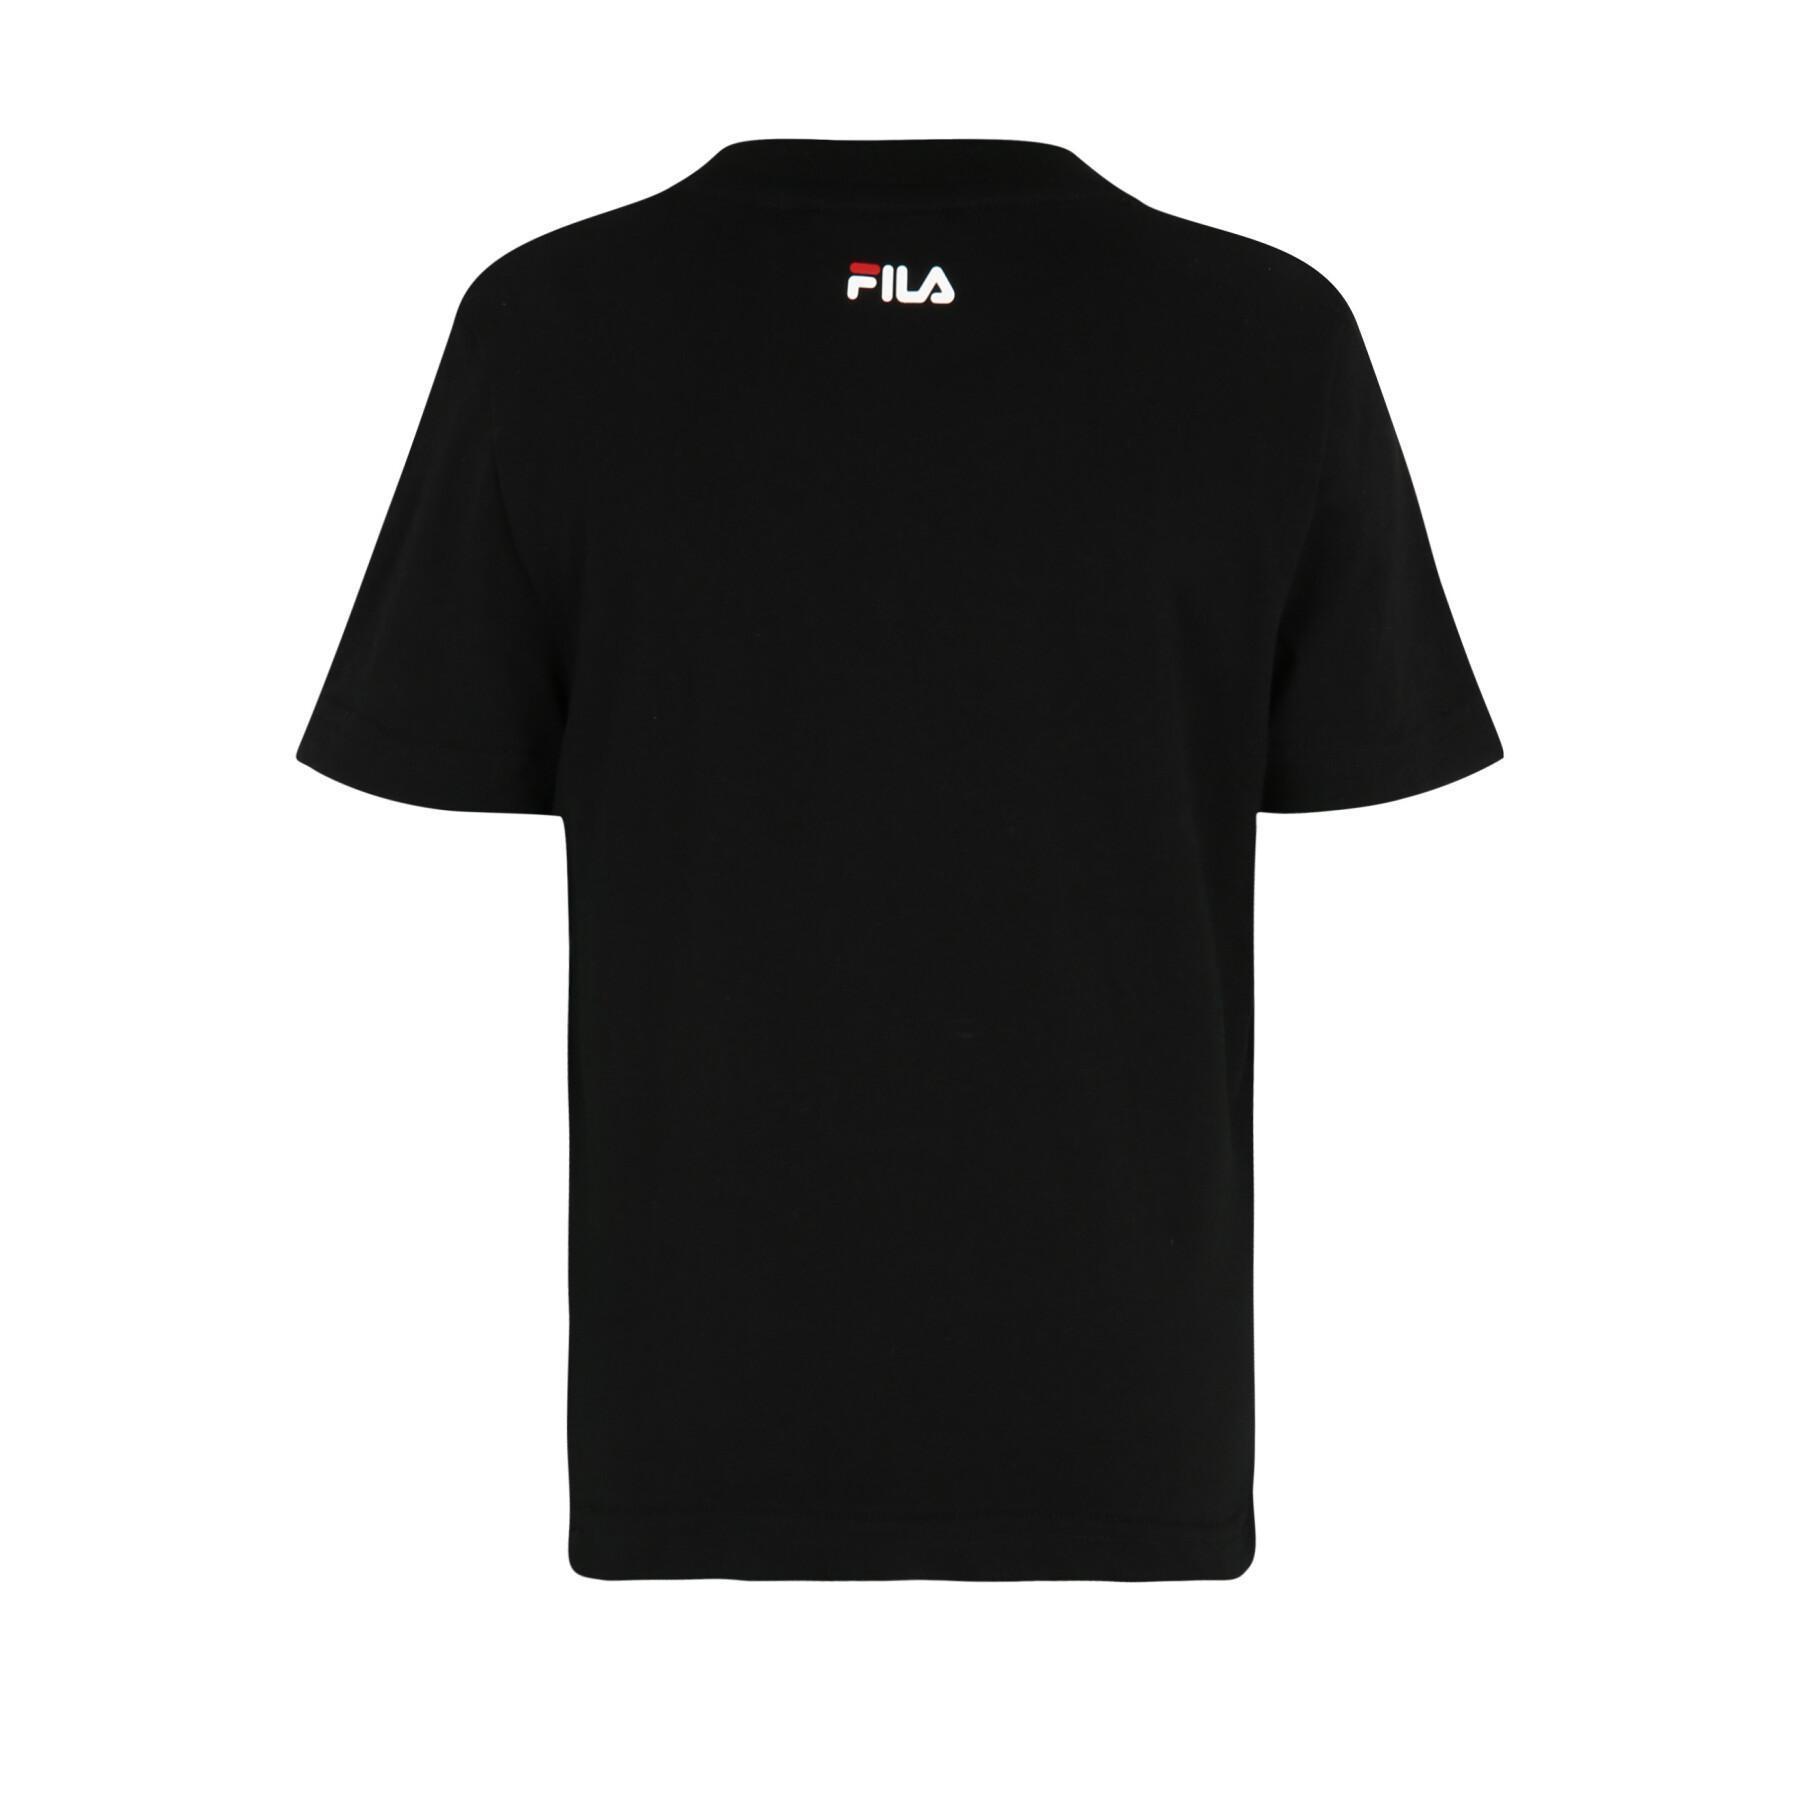 T-shirt manches longues enfant Fila Baia Mare Classic Logo